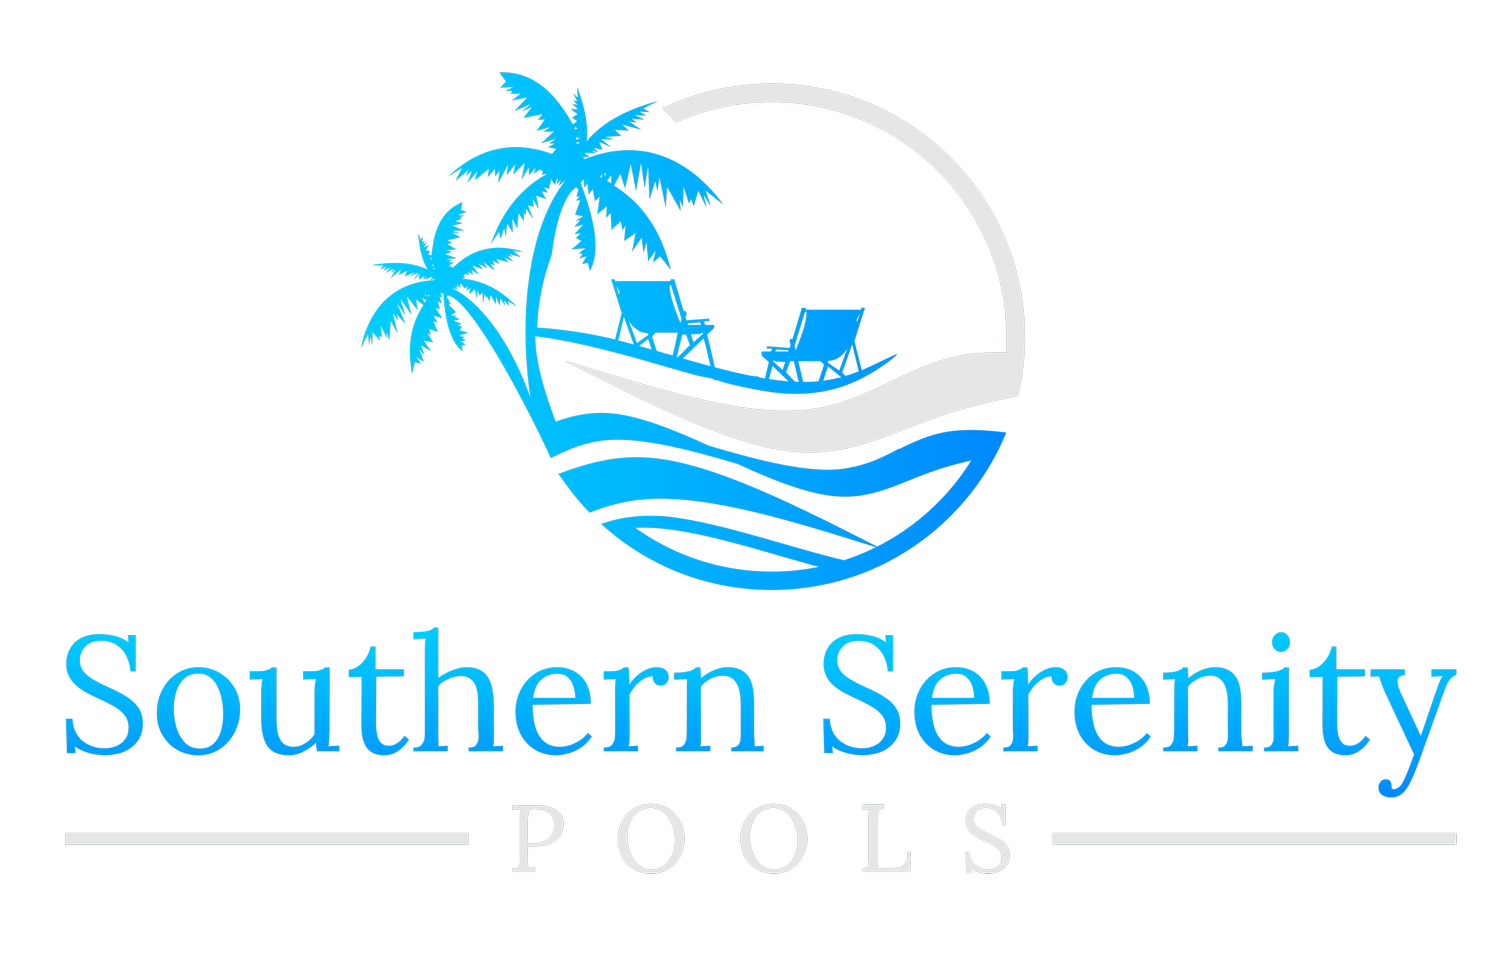 Southern Serenity Pools